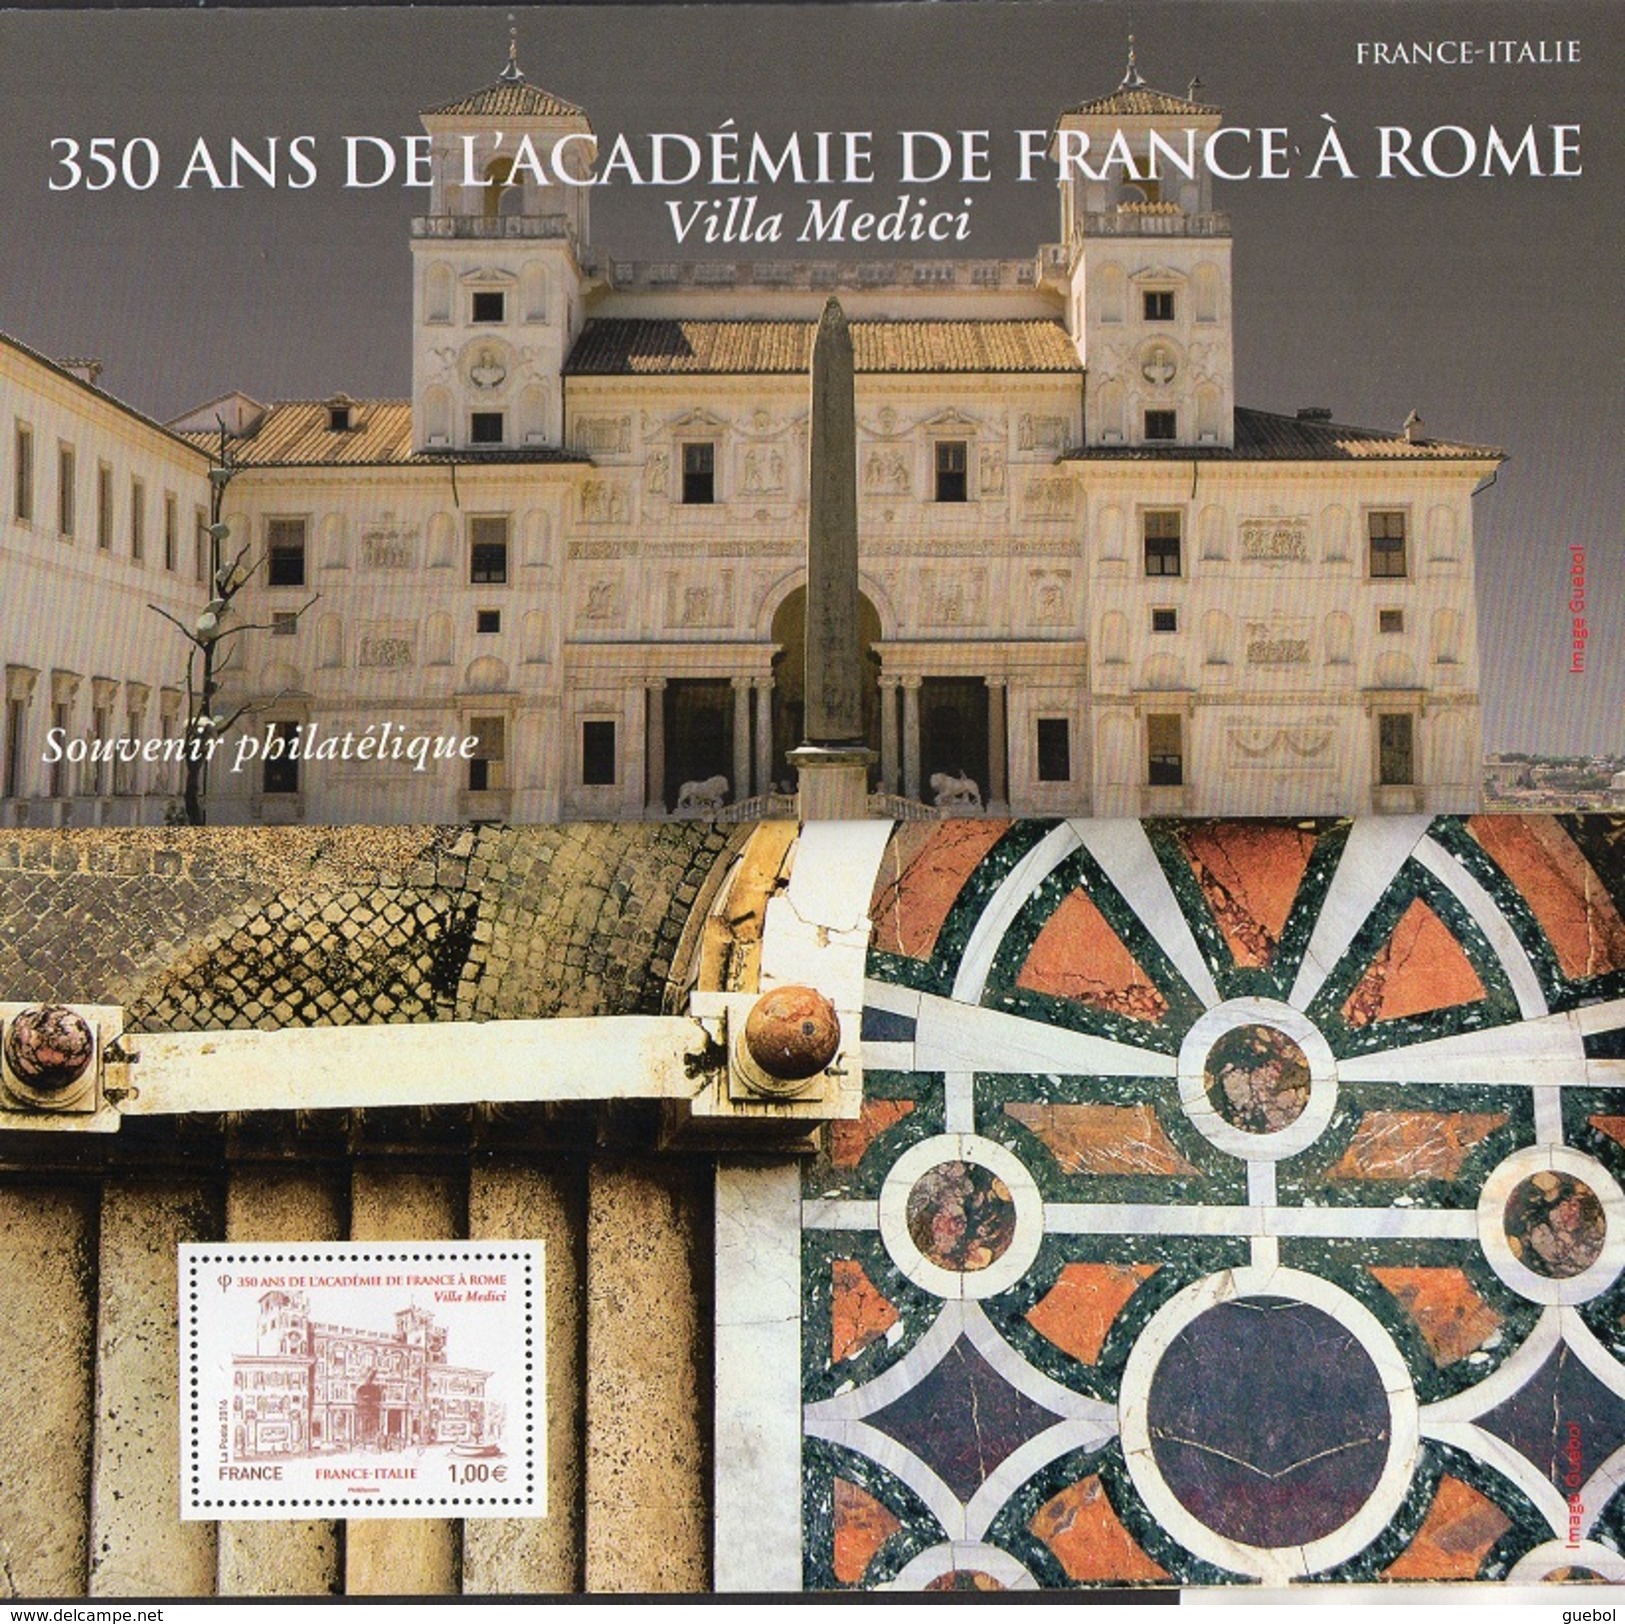 350 ans de l’Académie de France à Rome - Villa Medici France - Italie